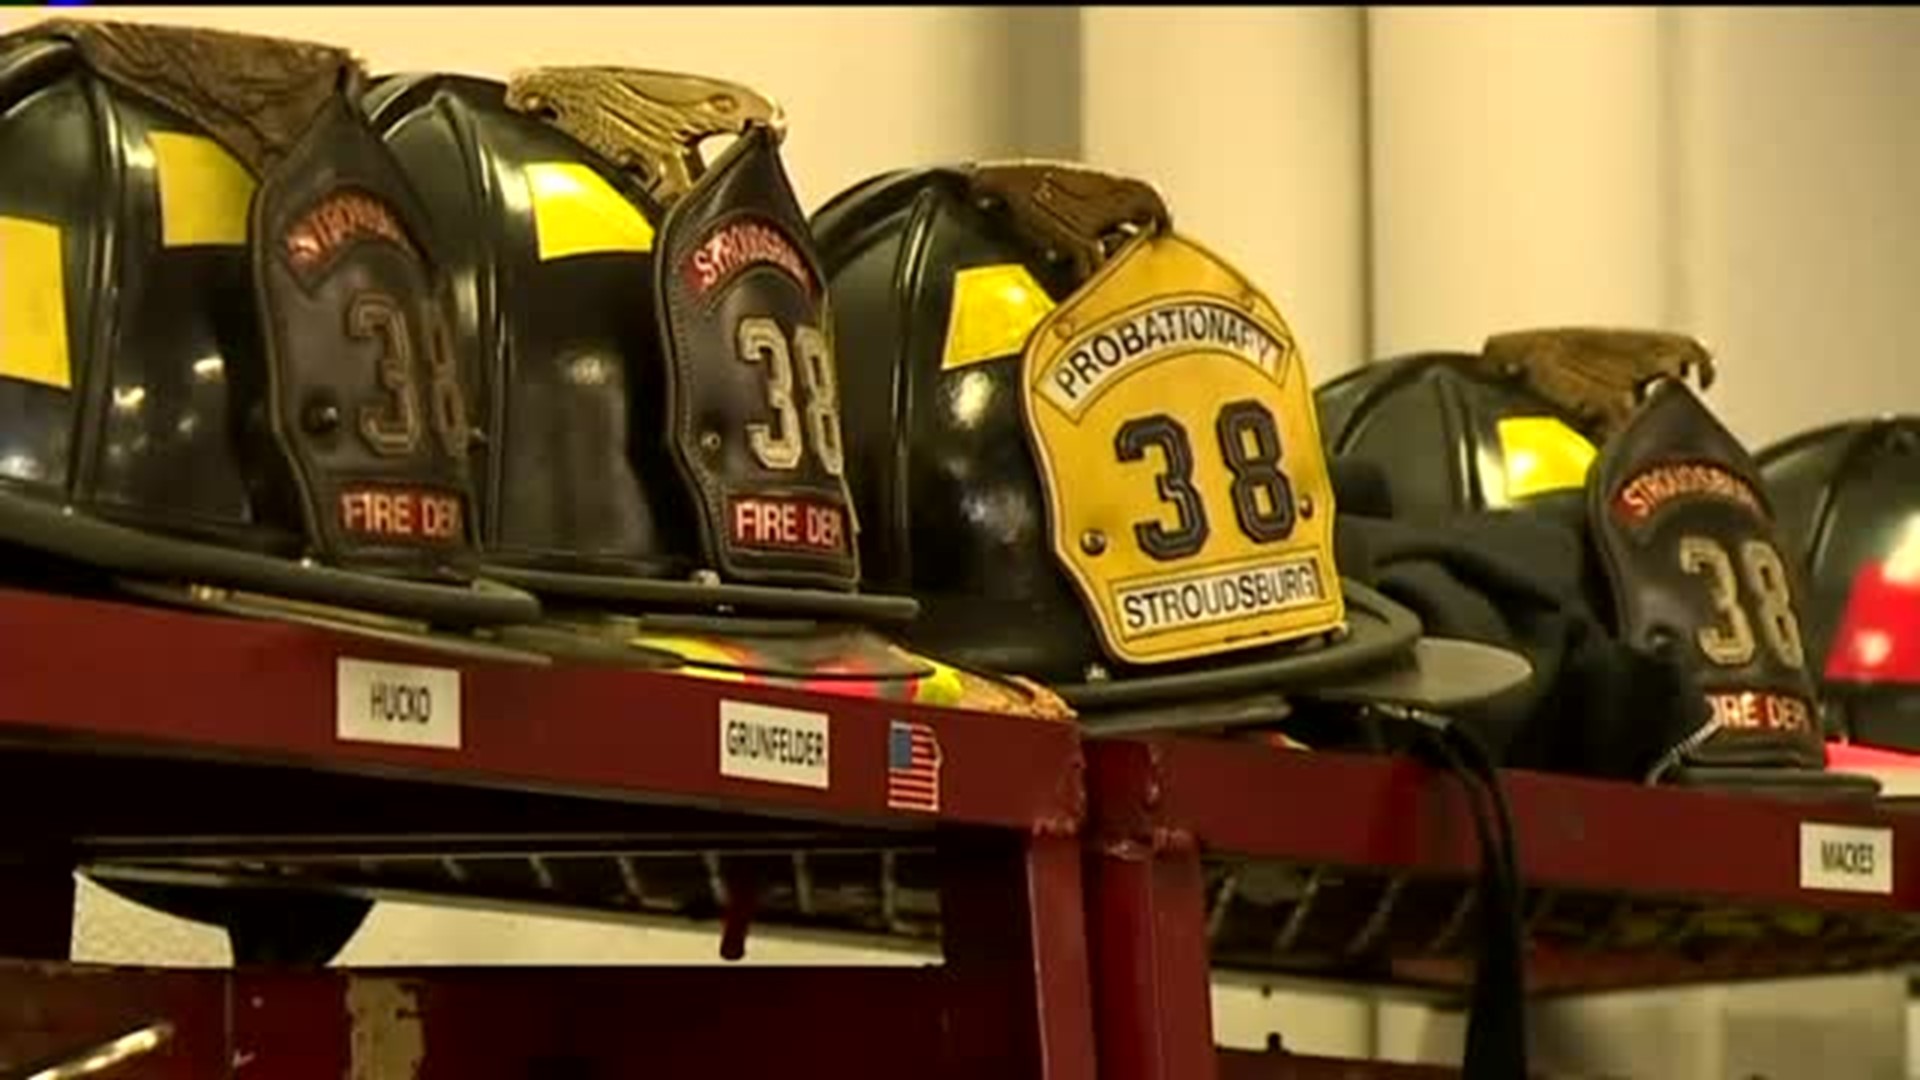 More Fire Volunteers Needed in Stroudsburg